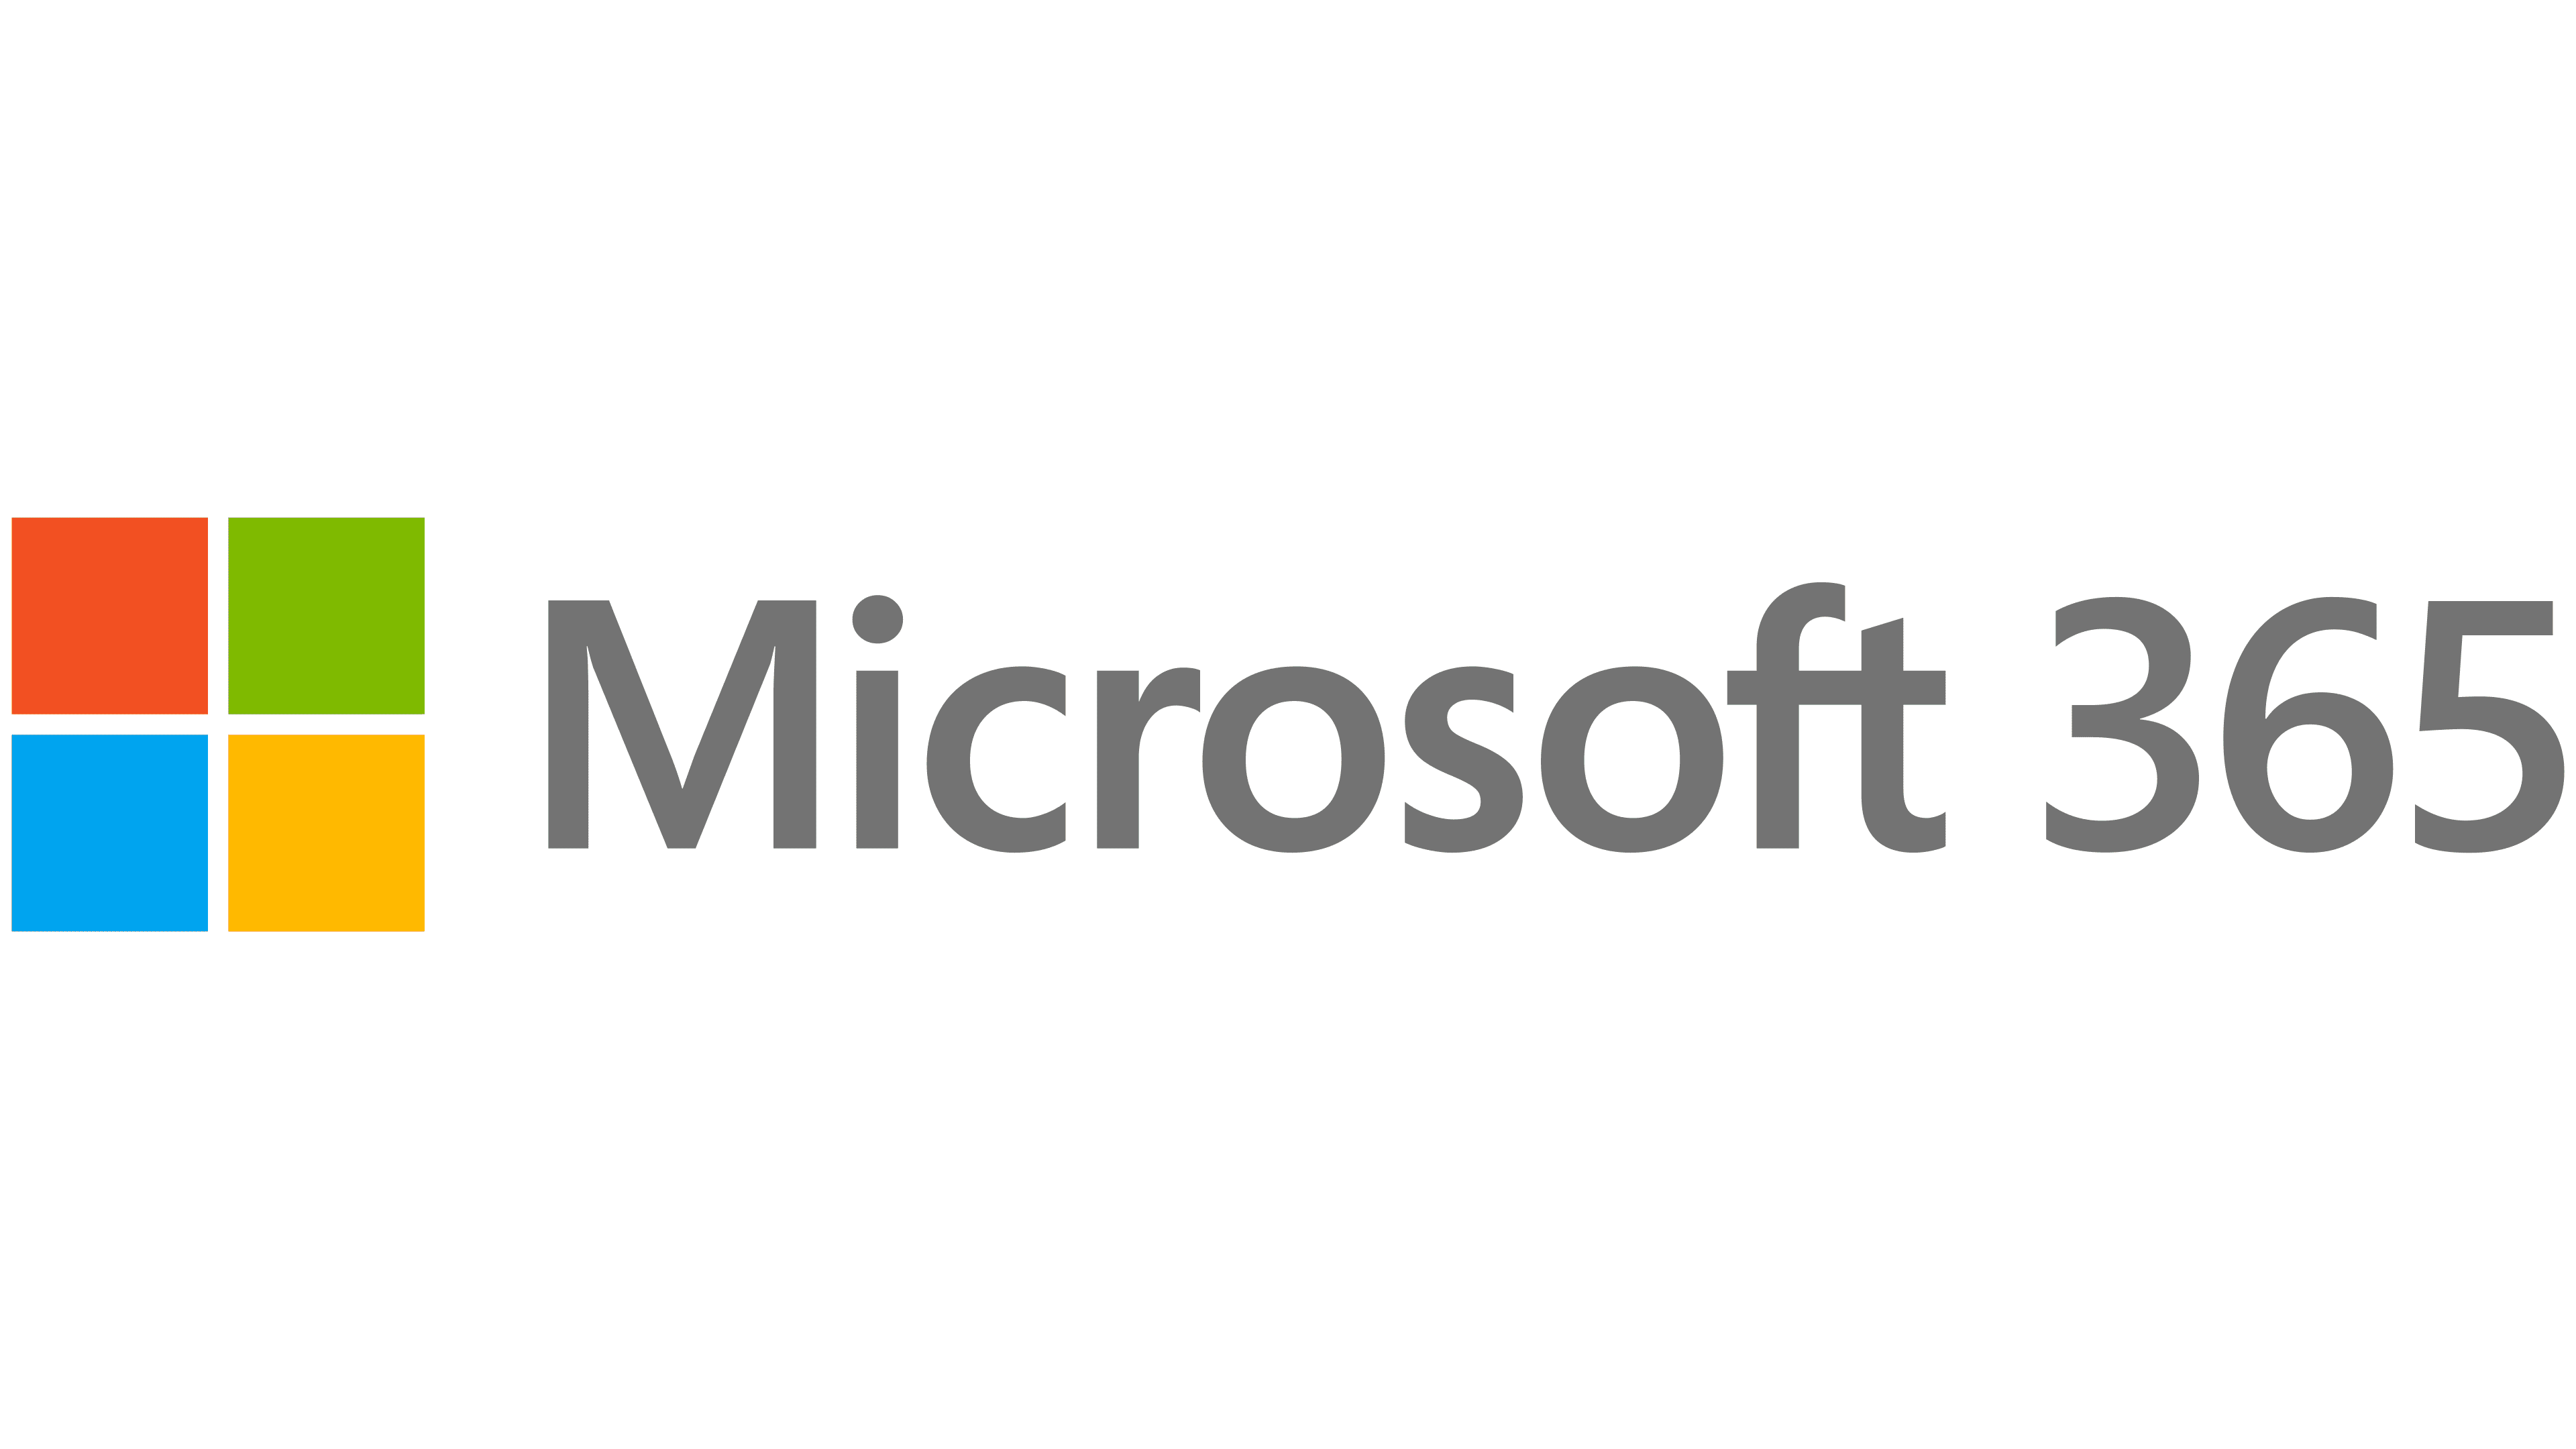 Microsoft365_logo